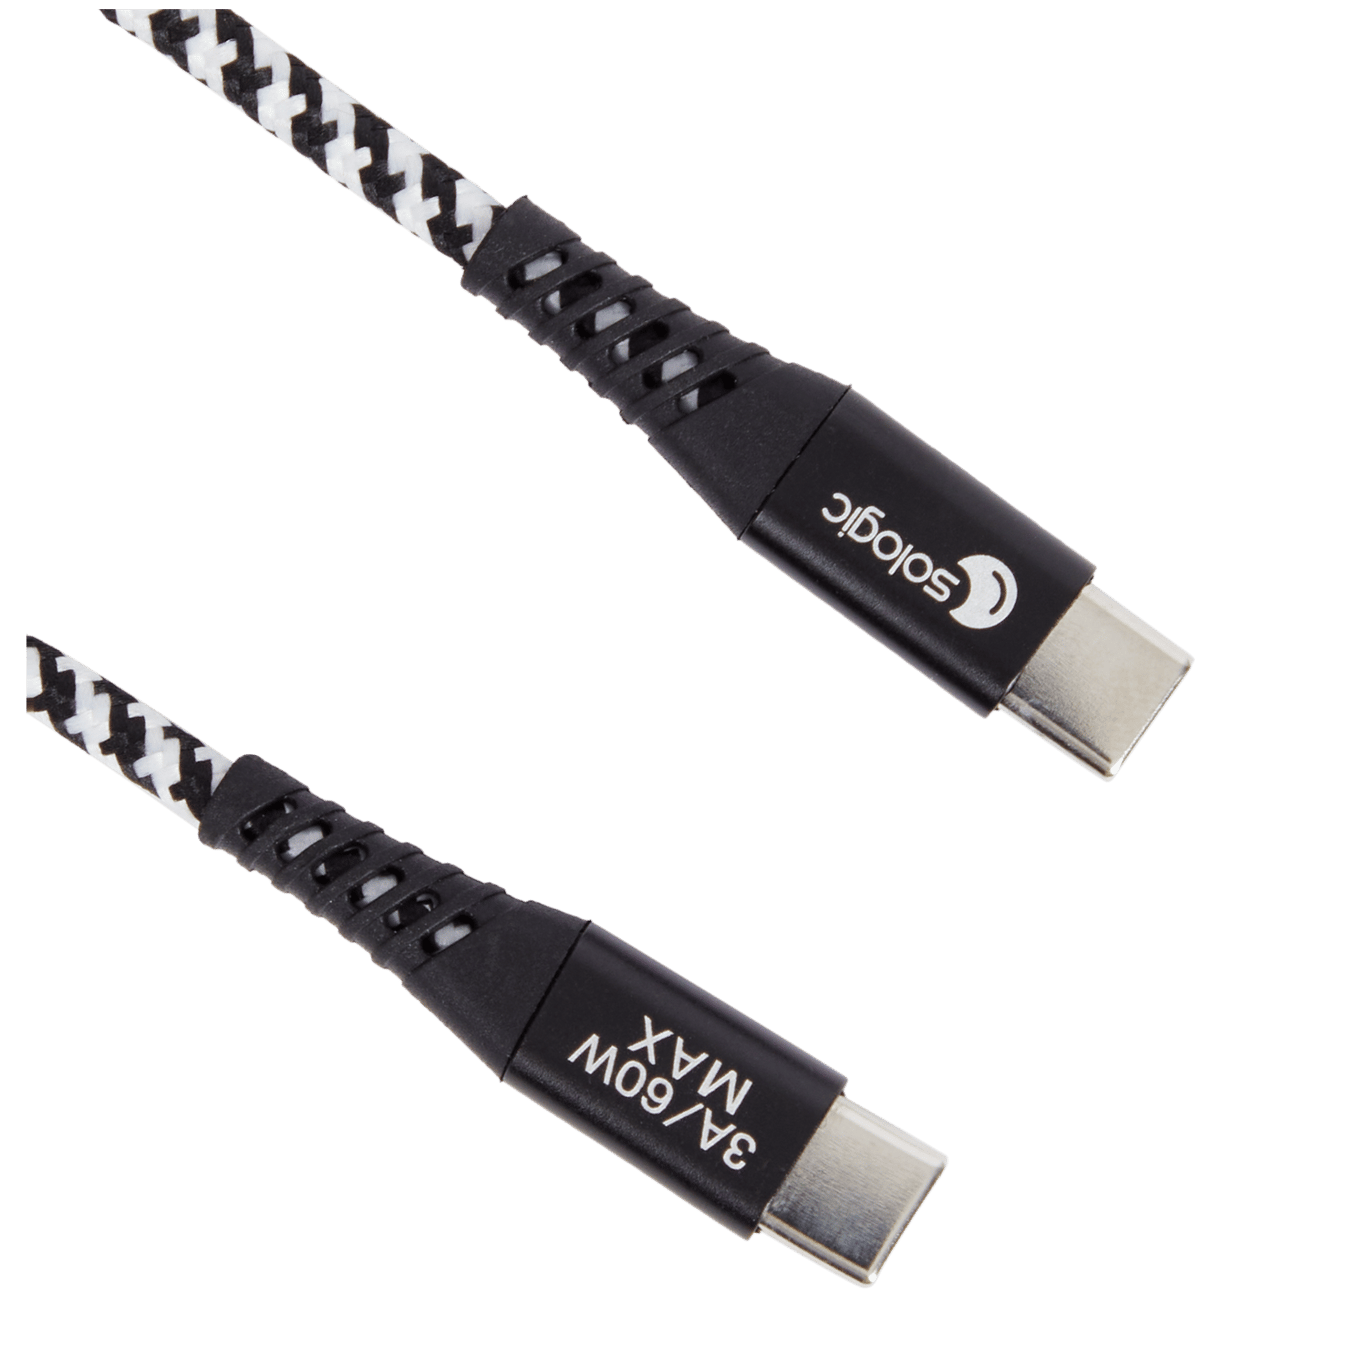 Cable de carga y de datos Sologic De USB-C a USB-C